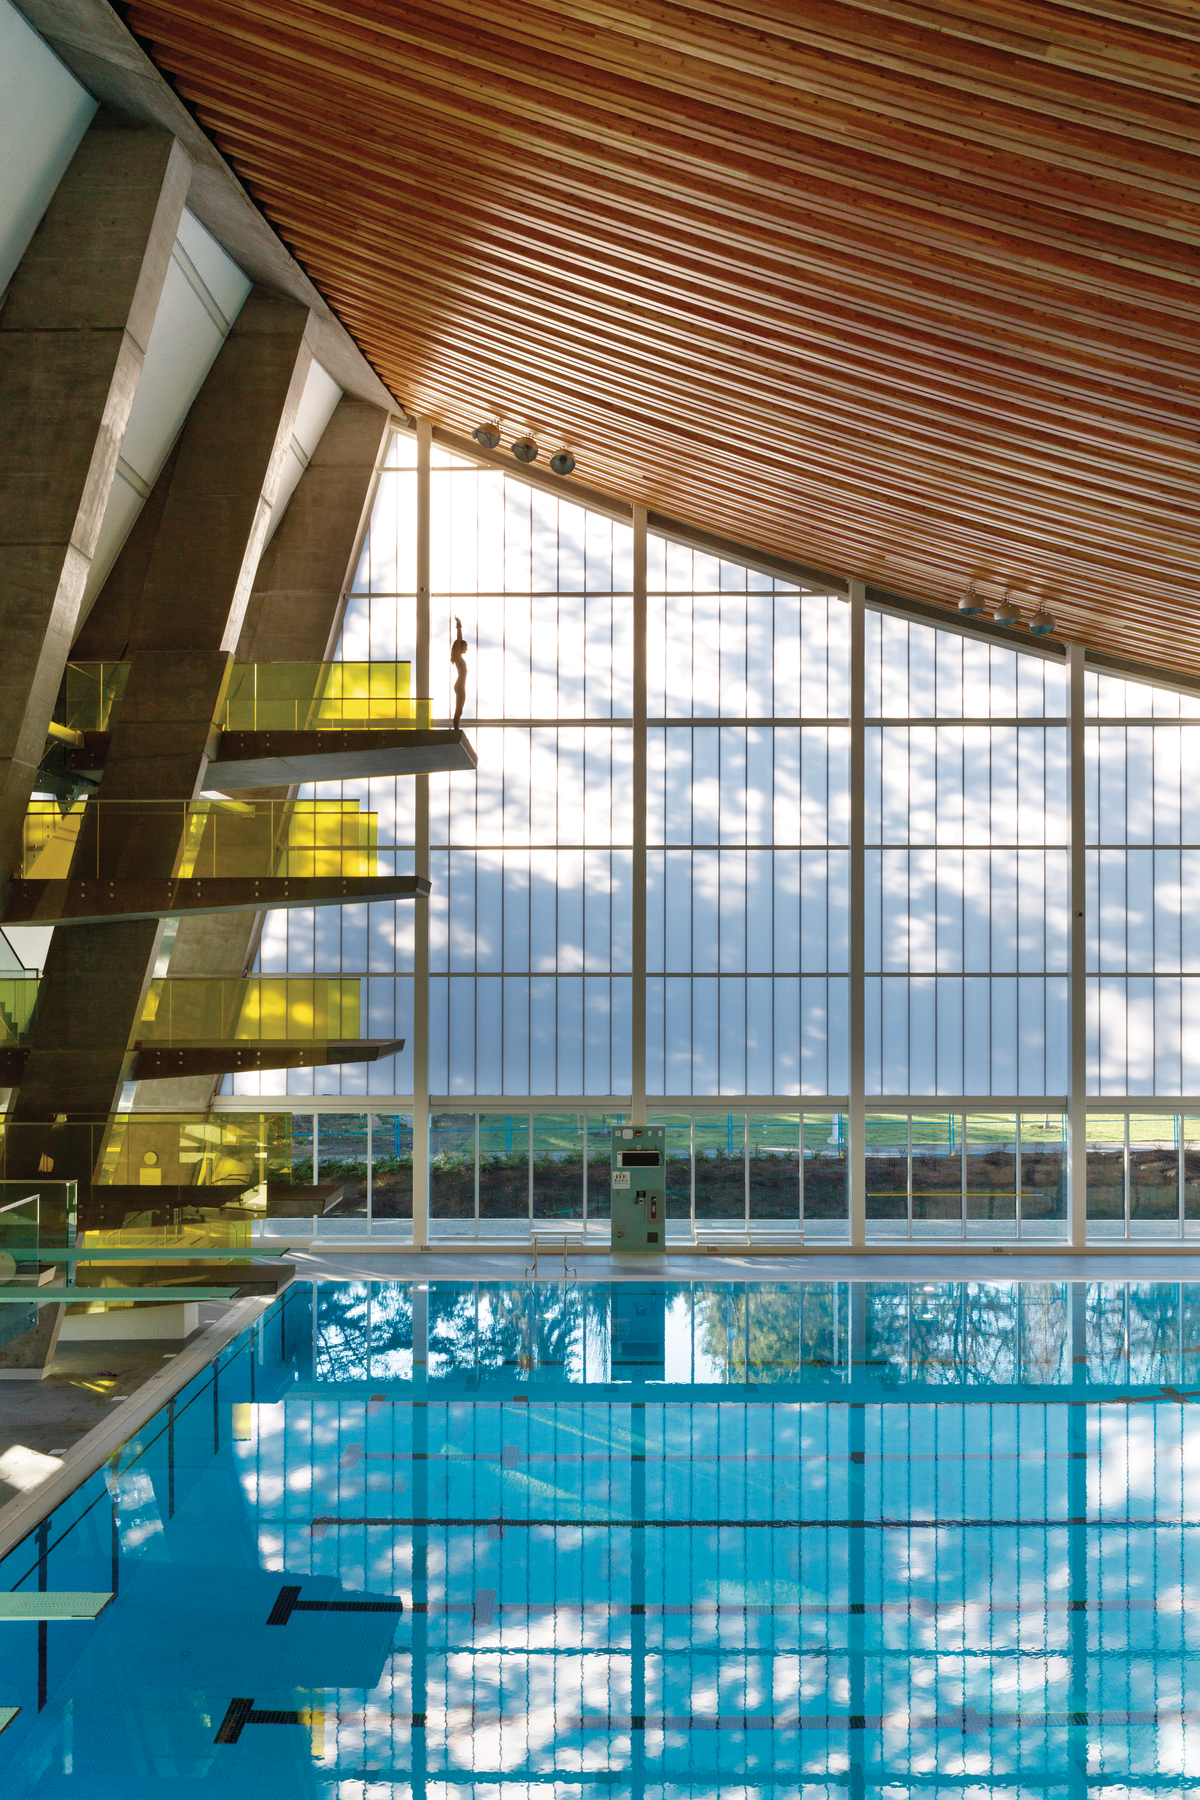 Grandview Heights水上中心的日间室内景观，显示由混凝土柱支撑的弧形胶合木(胶合木)天花板，背景为整面玻璃墙，前景为10米平台上的潜水员